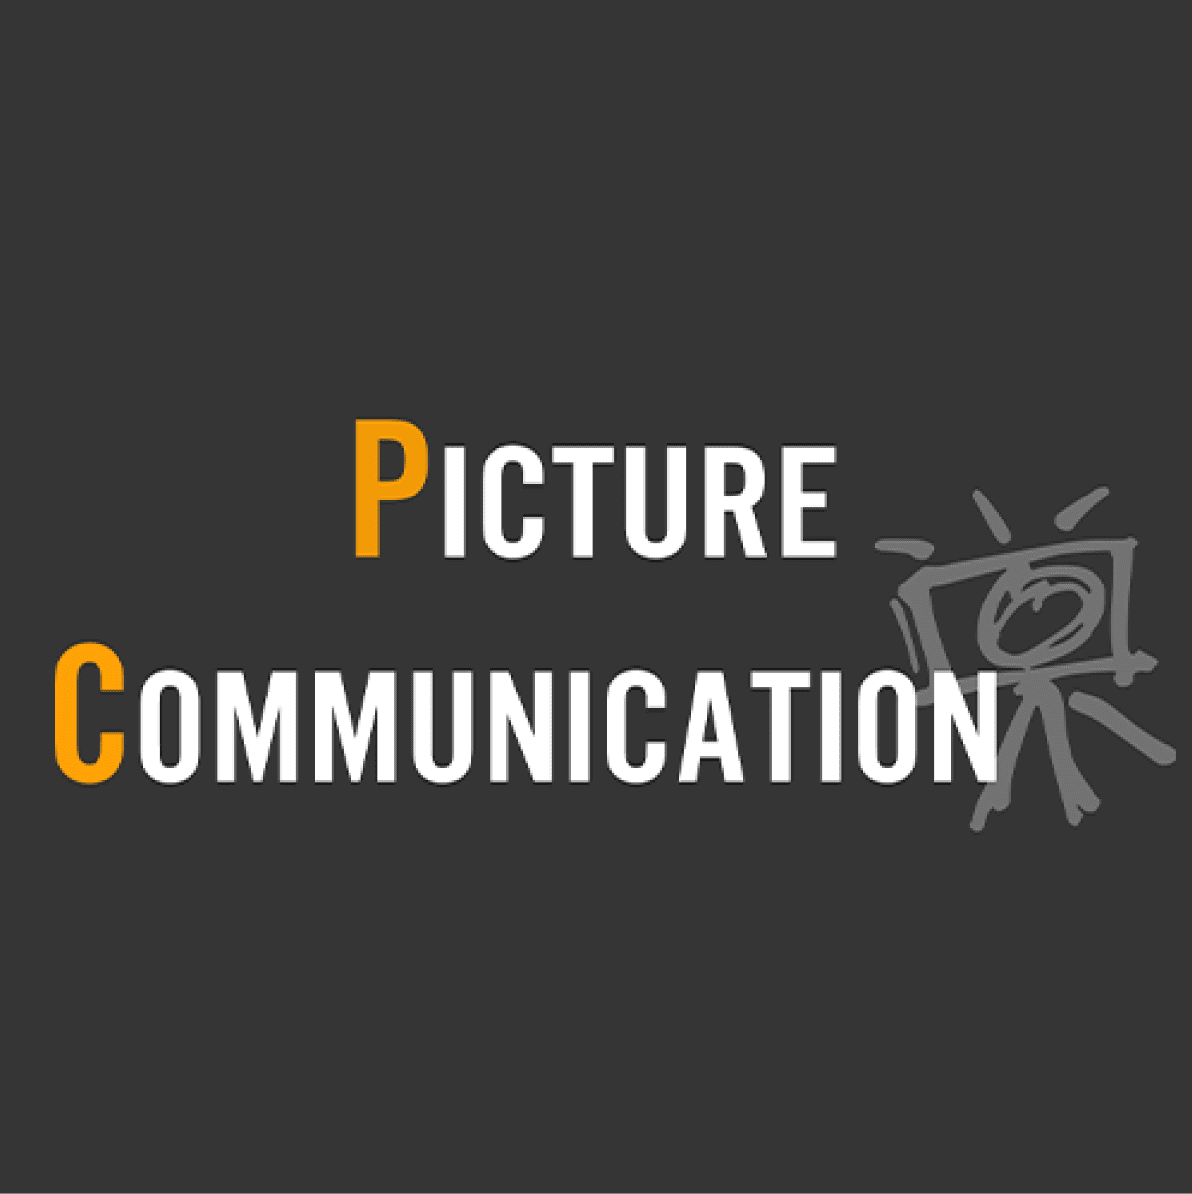 Picture Communication company logo